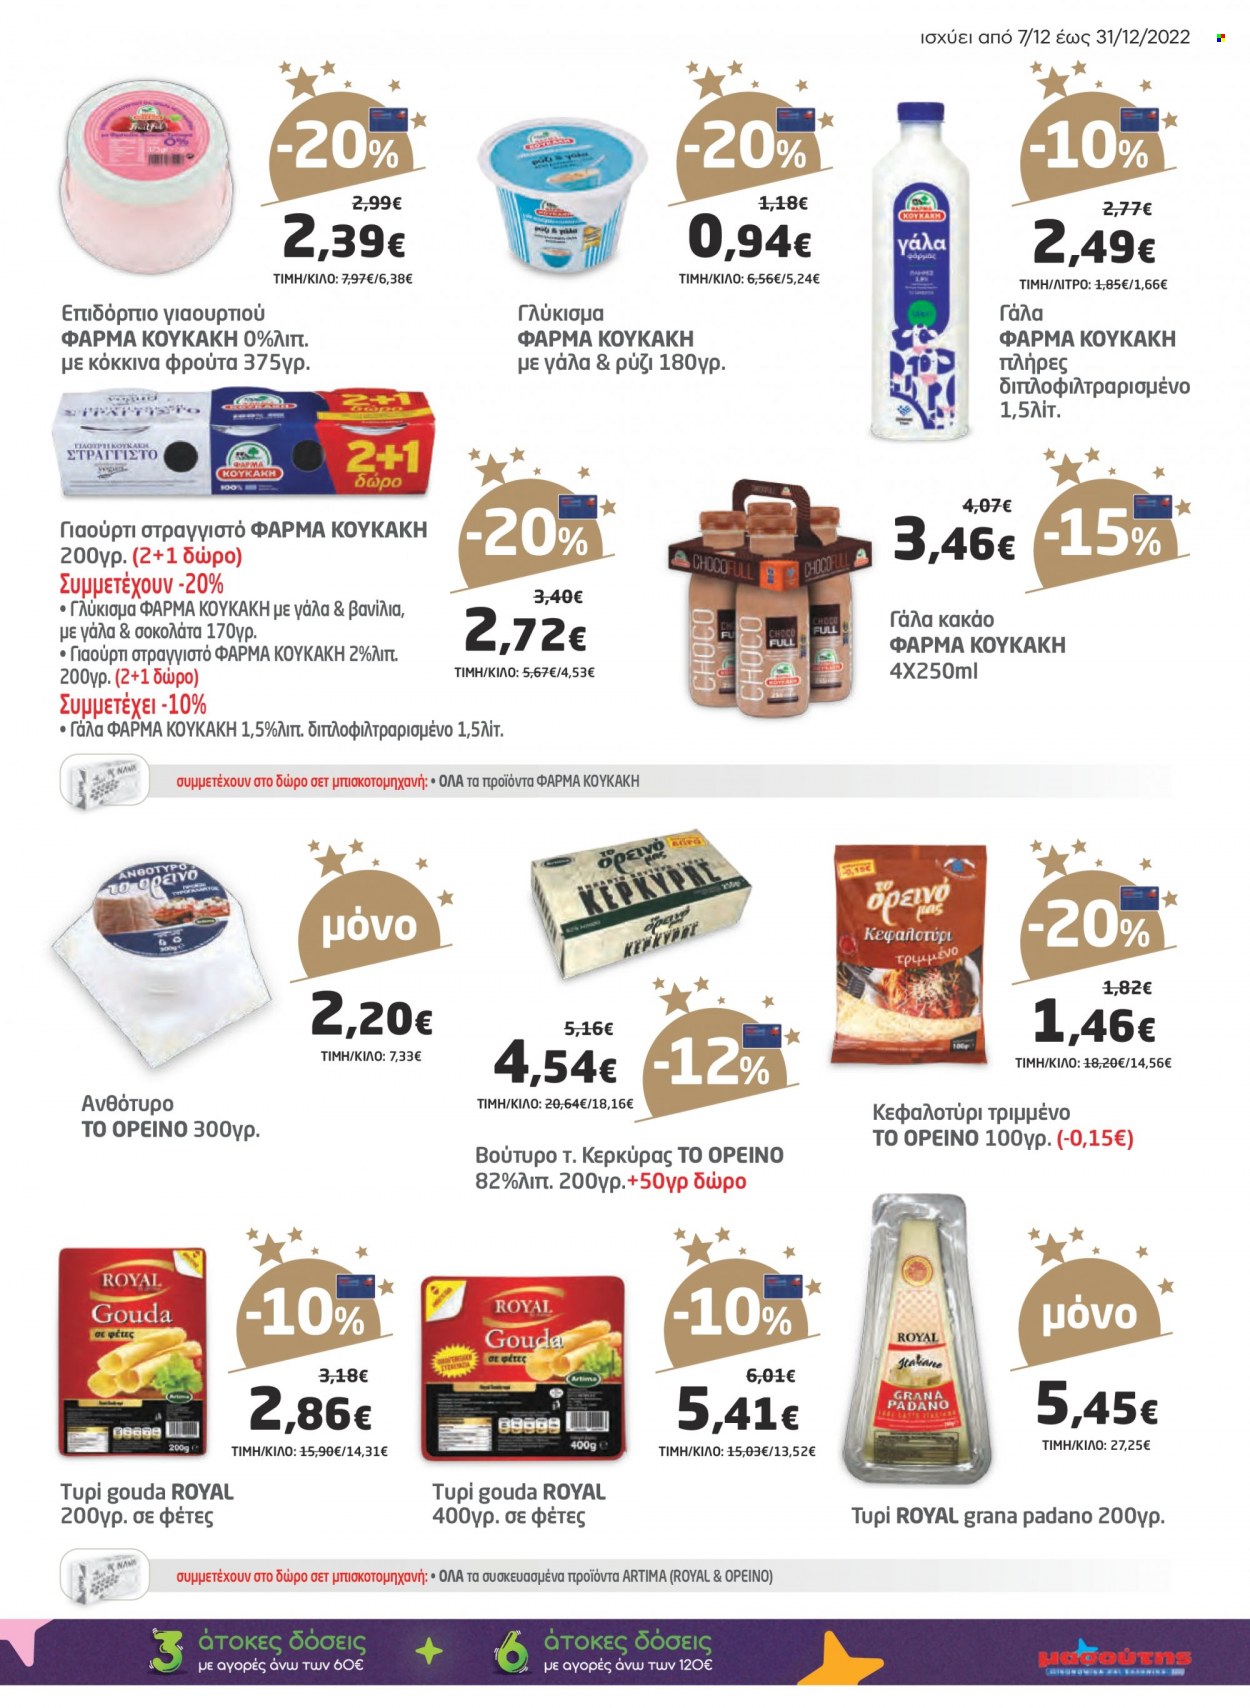 thumbnail - Φυλλάδια Masoutis - 07.12.2022 - 31.12.2022 - Εκπτωτικά προϊόντα - gouda, γιαούρτι, γάλα, βούτυρο, σοκολάτα, ρύζι. Σελίδα 15.